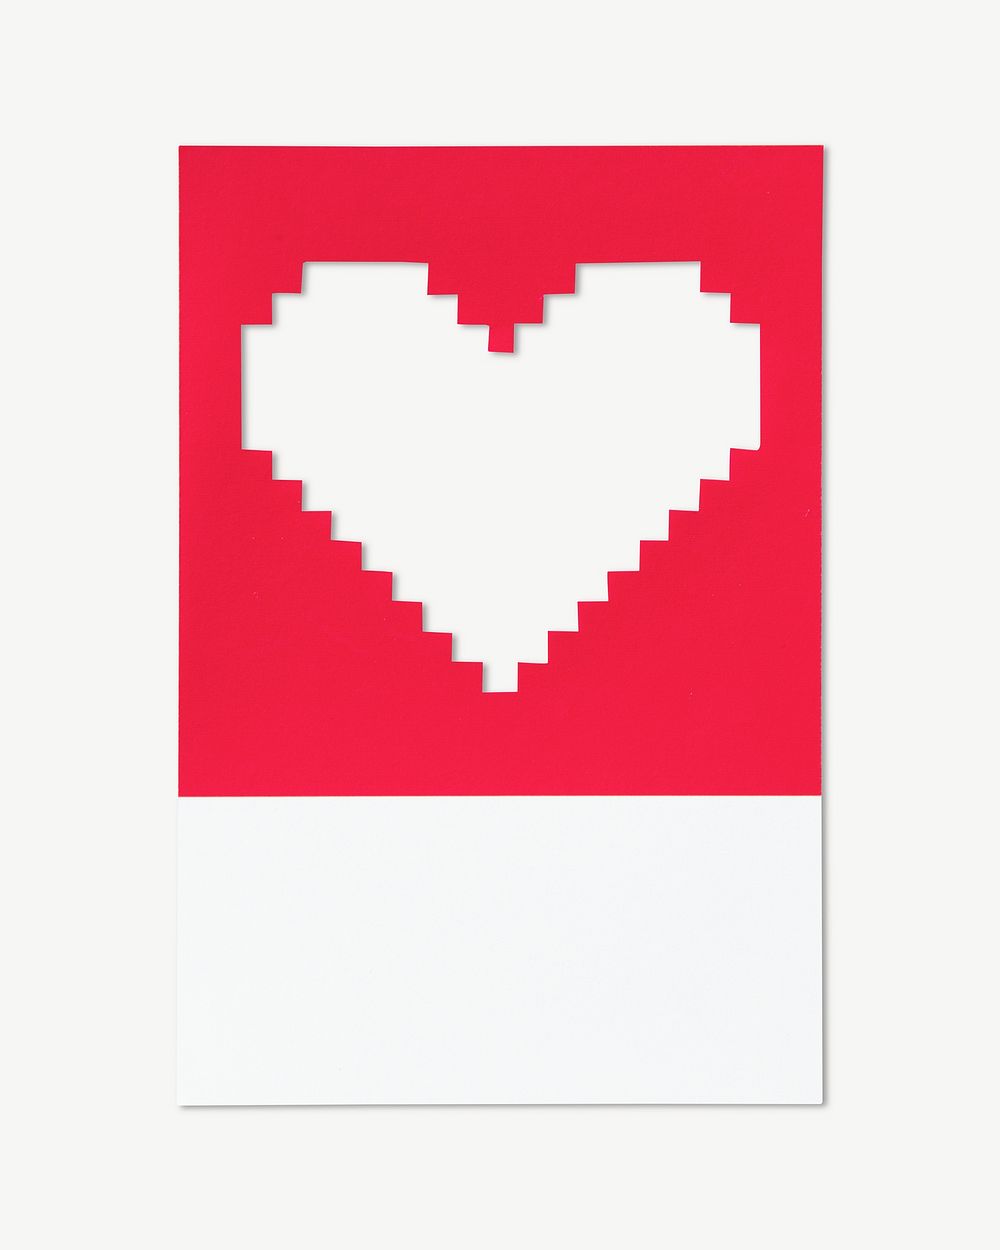 Pixelated heart shape 3D illustration psd